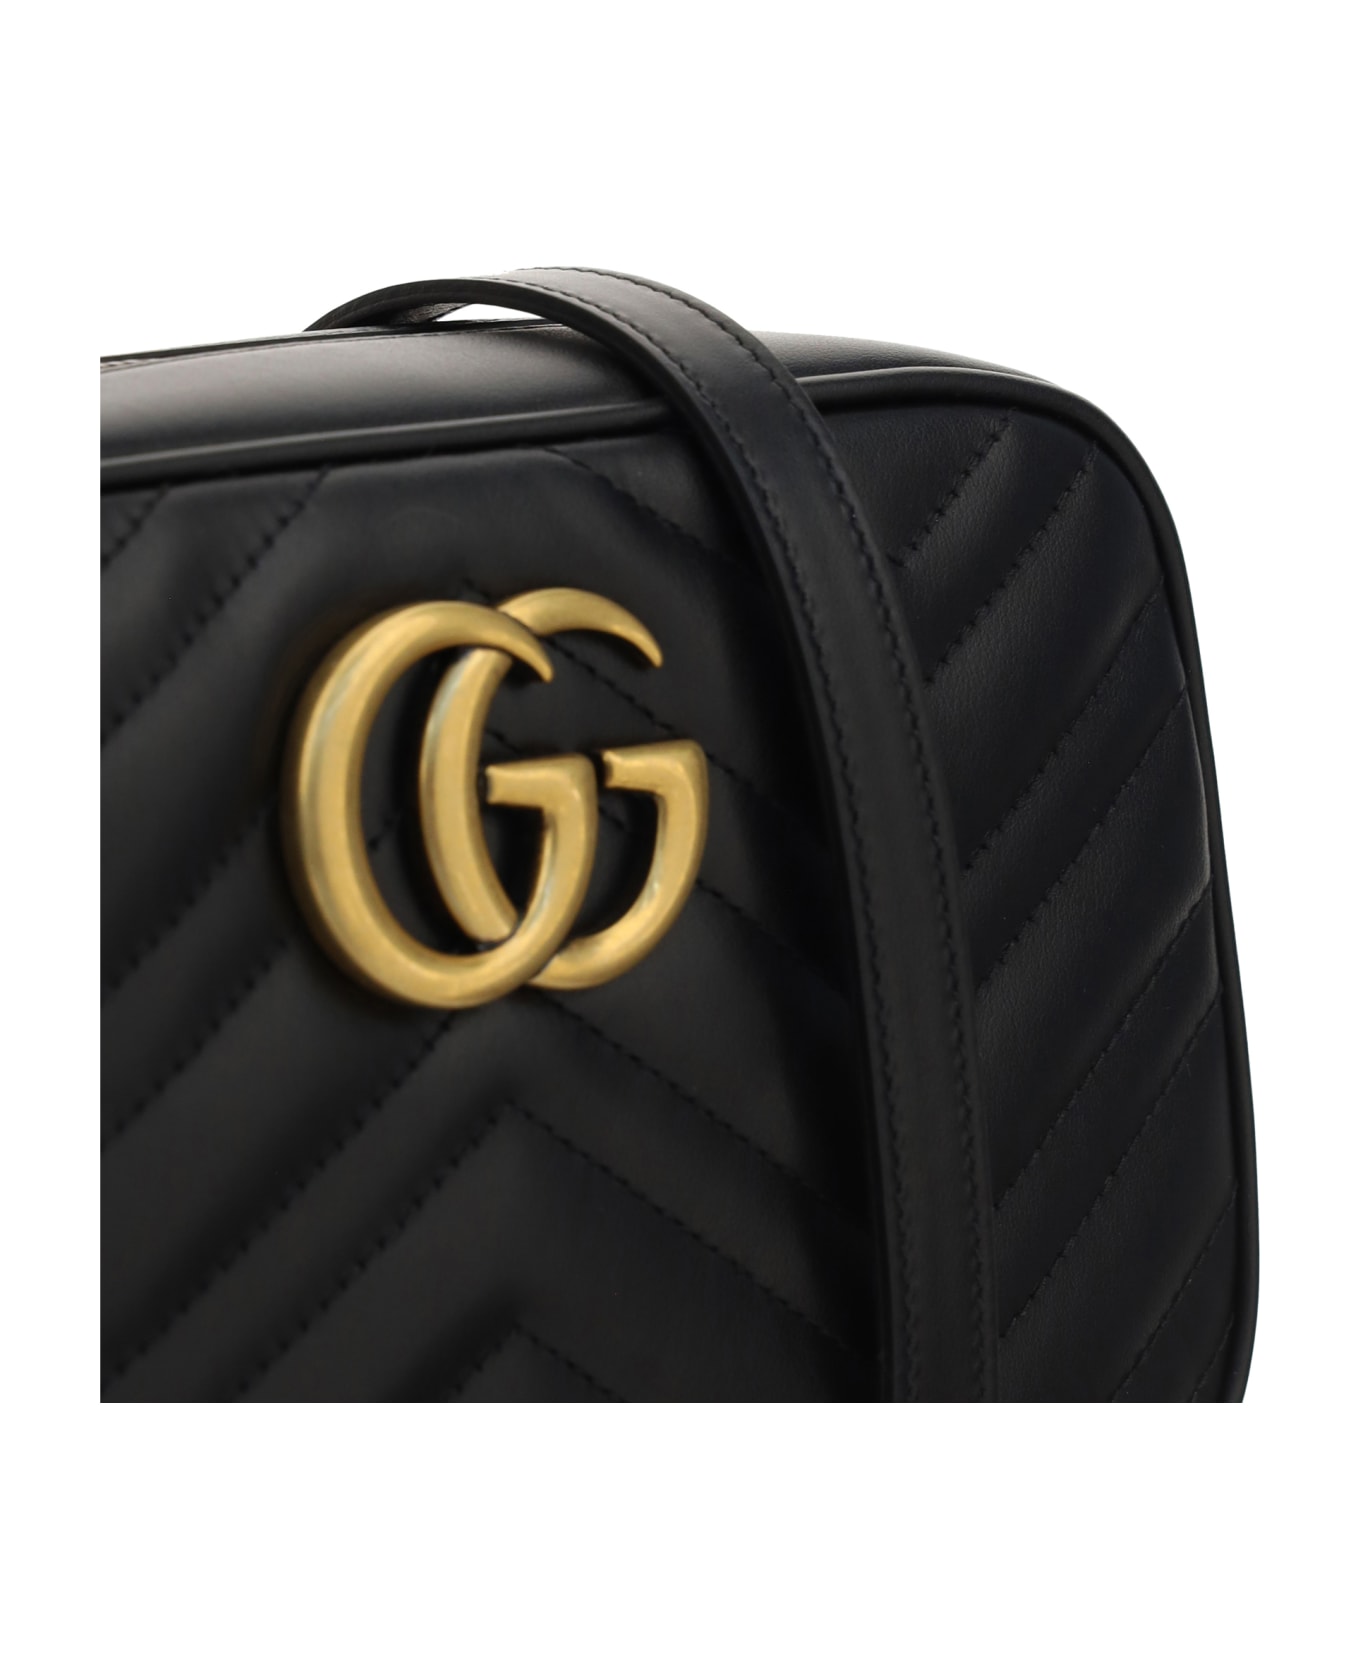 Gucci Lux Shoulder Bag - Nero